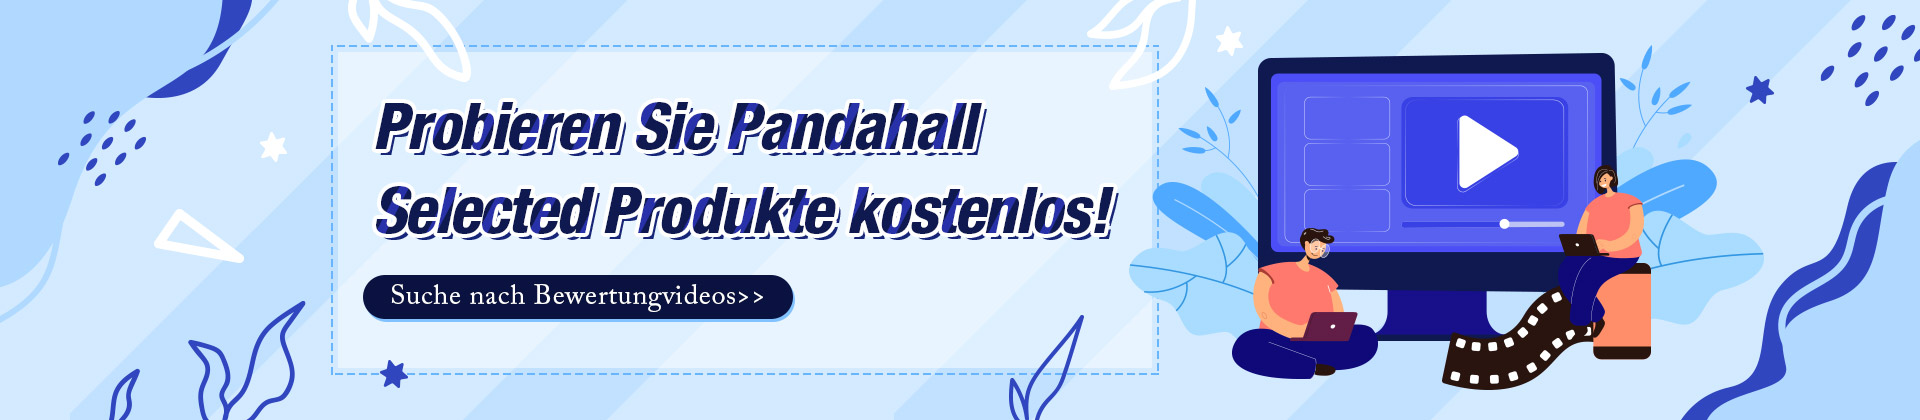 Probieren Sie Pandahall Selected Produkte kostenlos!